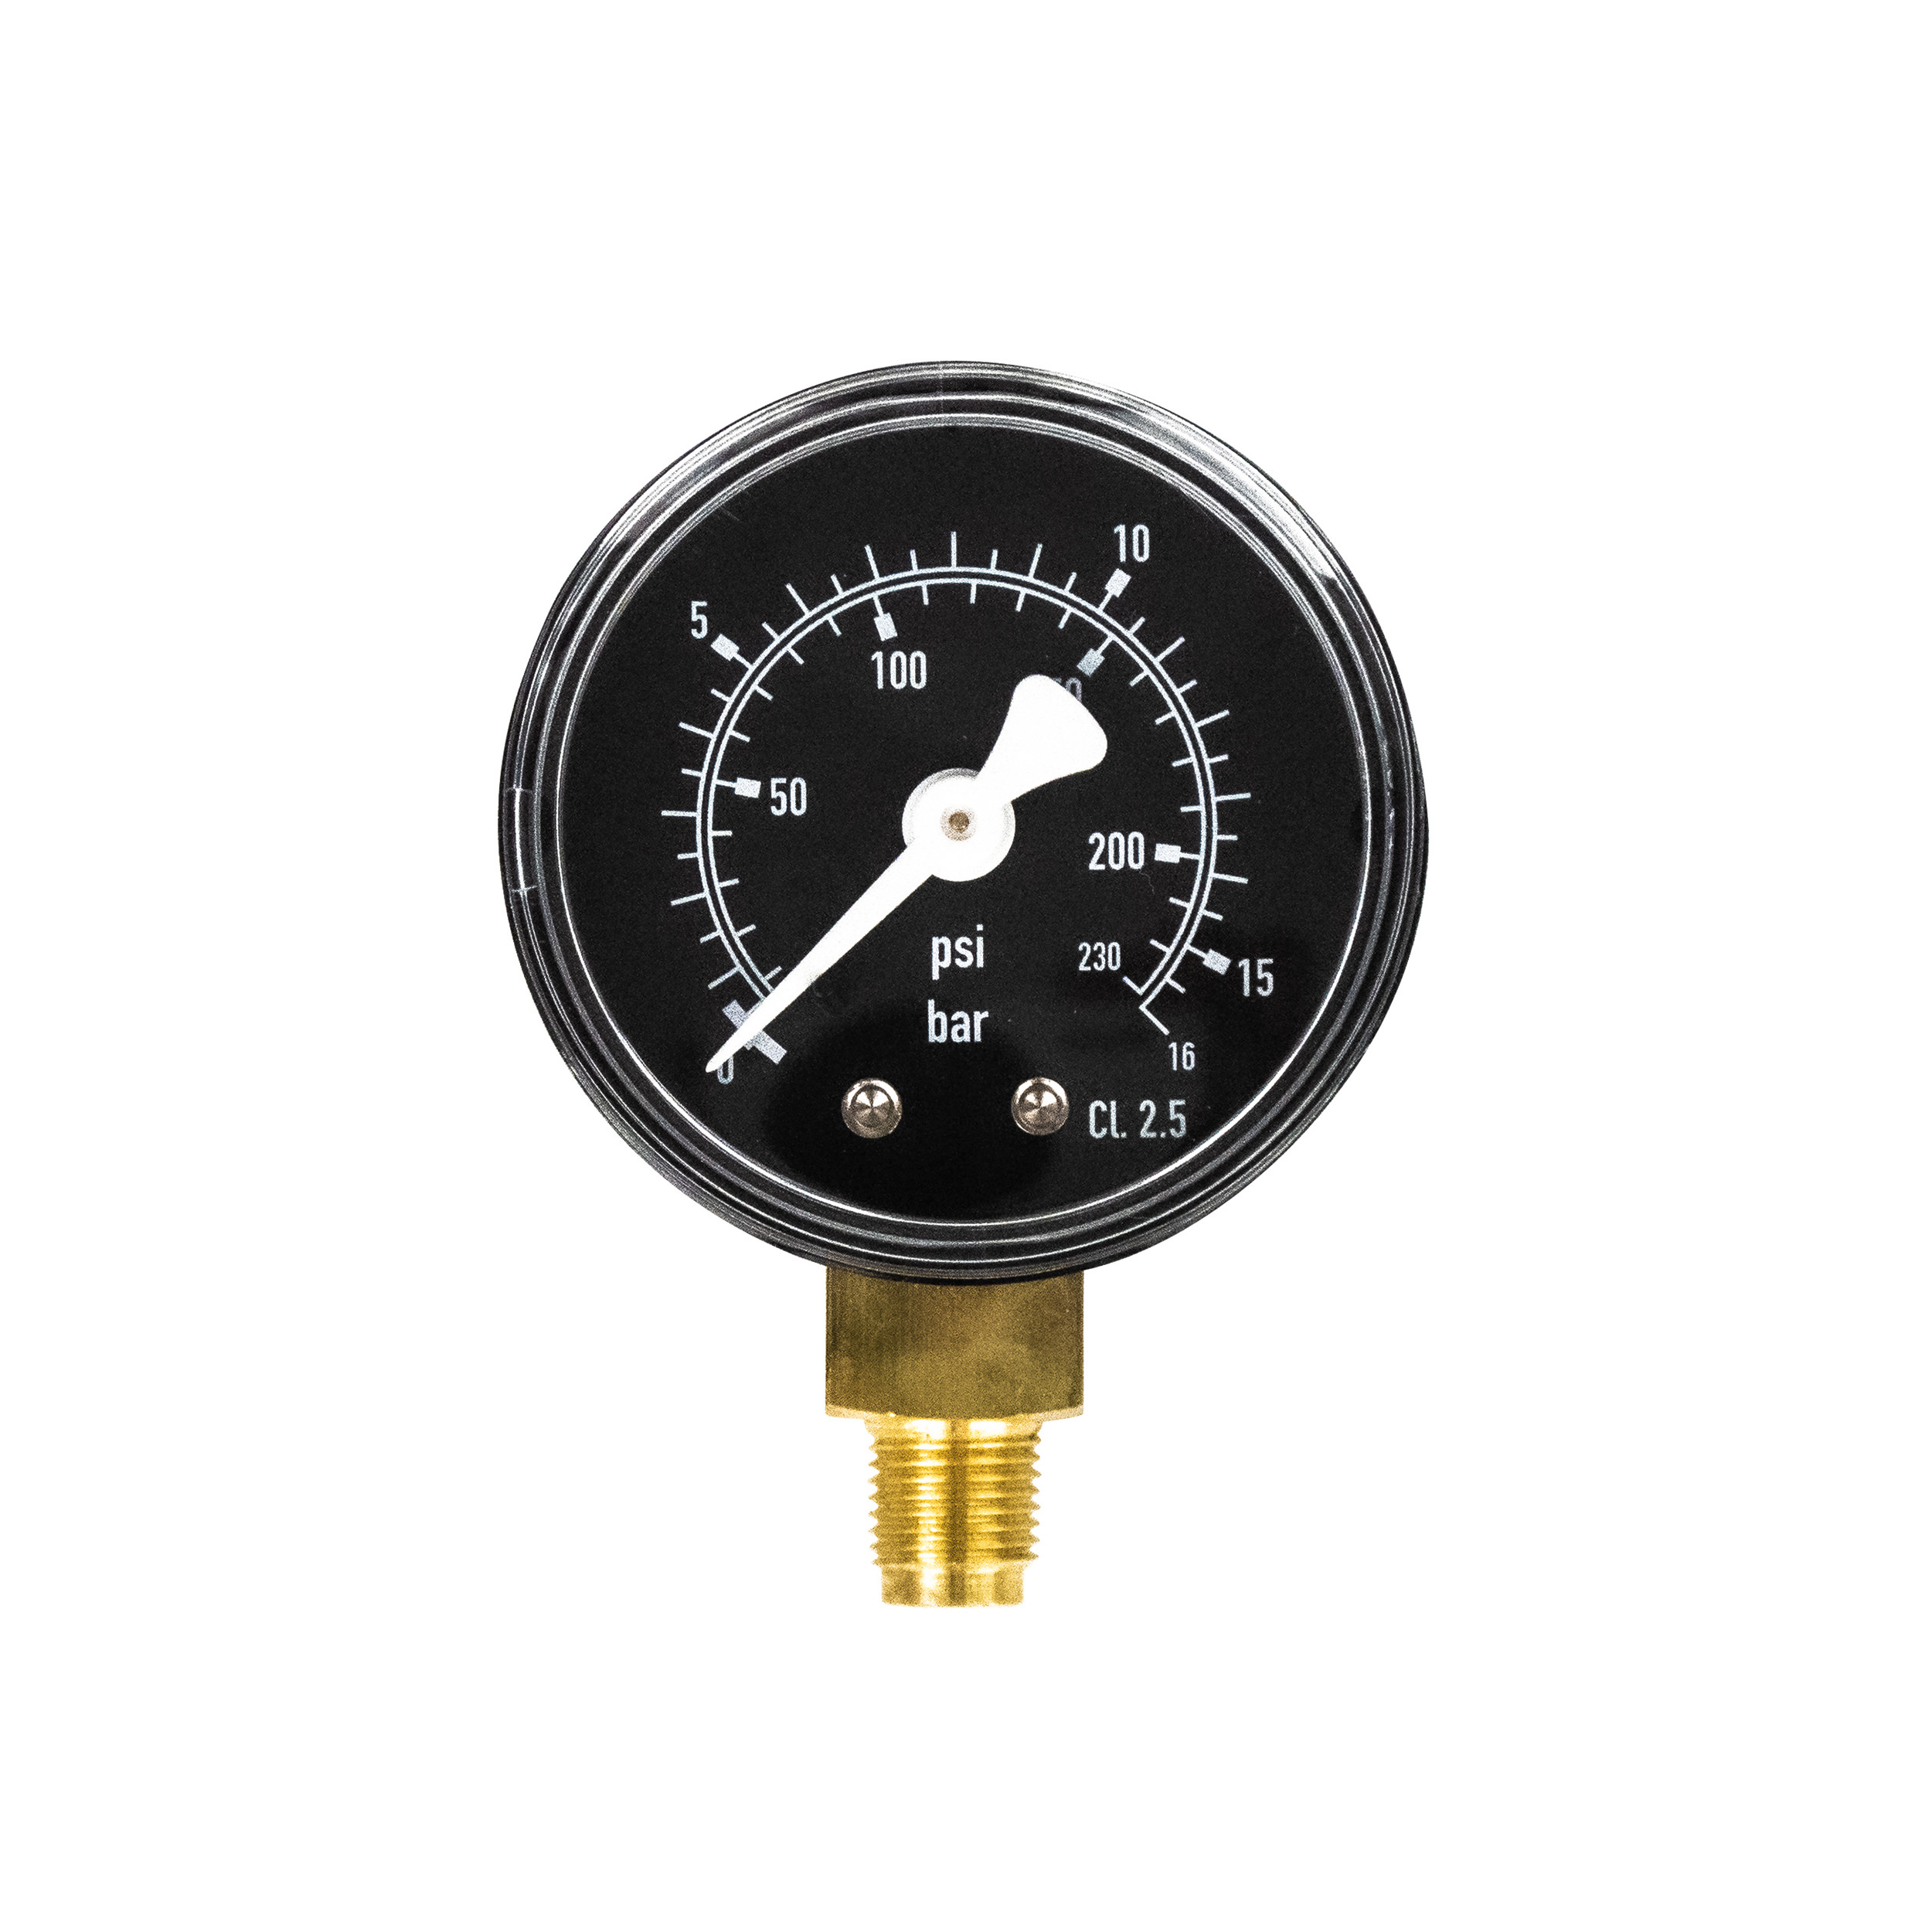 Pressure gauge Ø 50, vertical, class 2.5